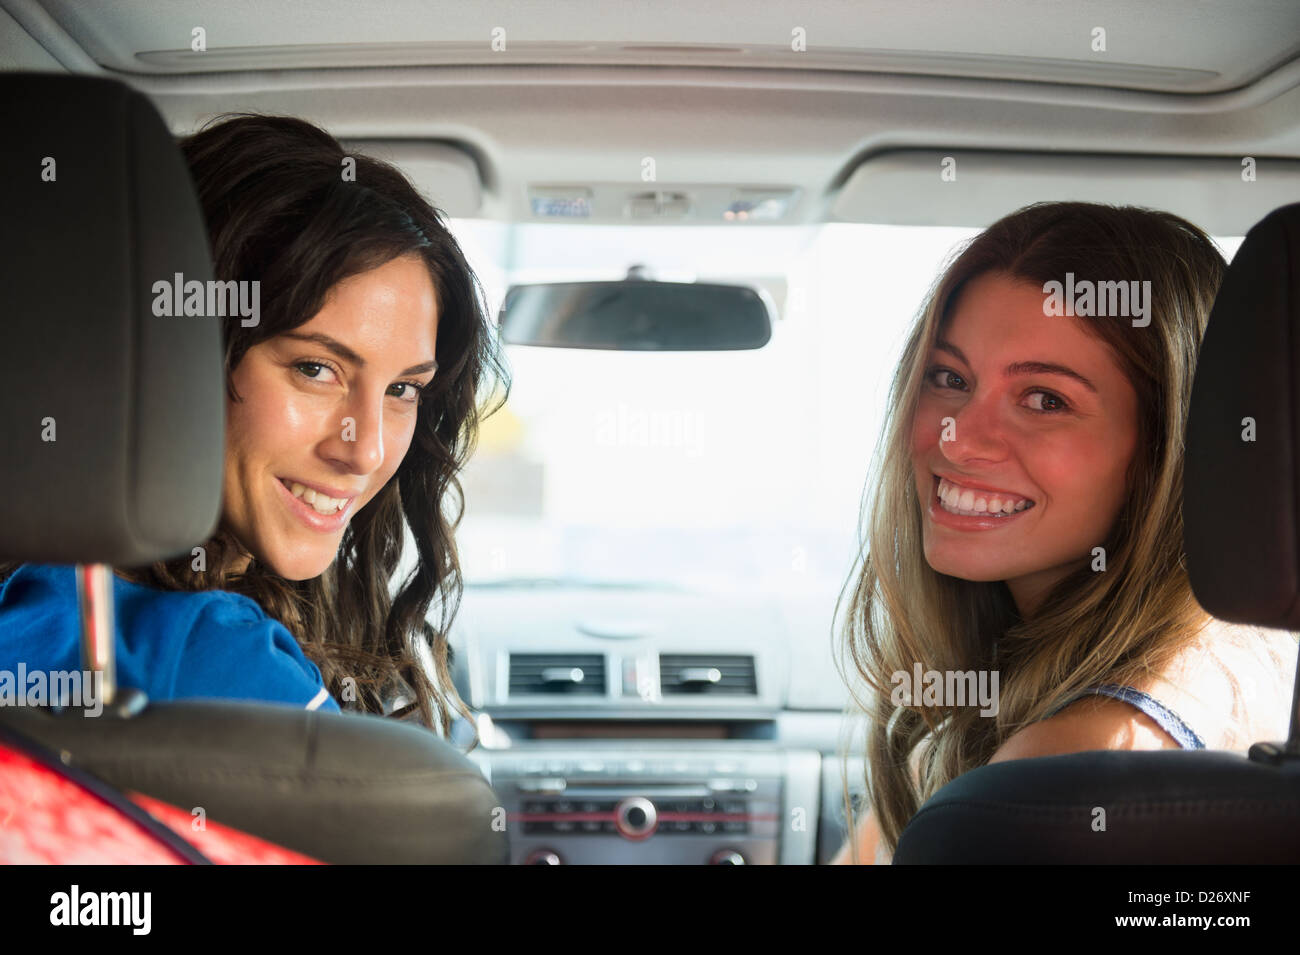 USA, New York State, Rockaway Beach, deux jeunes femmes dans... Banque D'Images